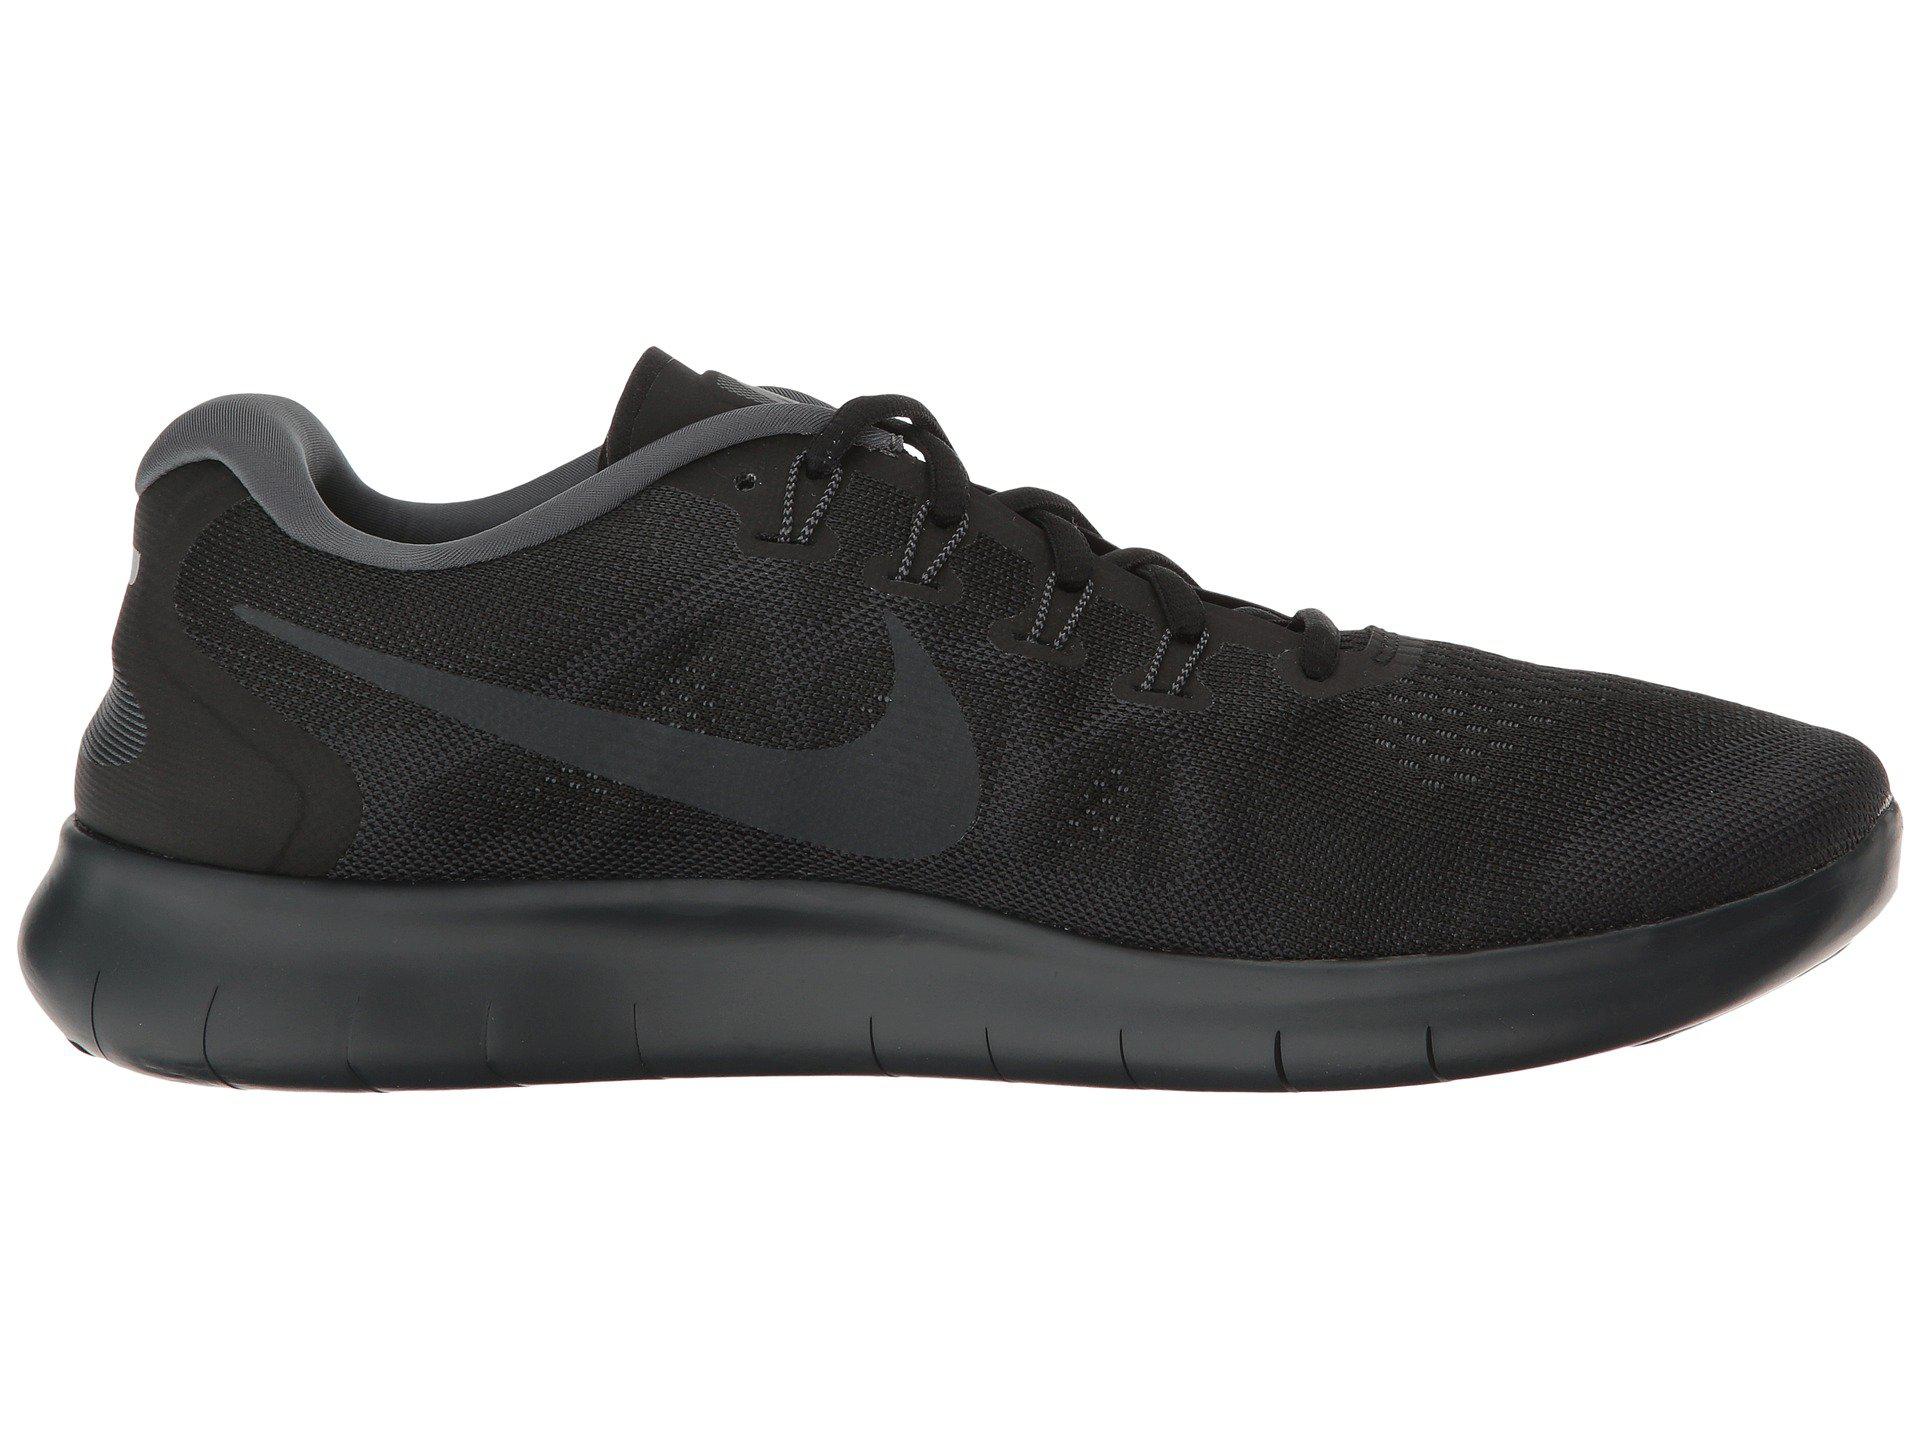 Nike Free Rn 2017 (black/anthracite/dark Grey) Men's Running Shoes for Men